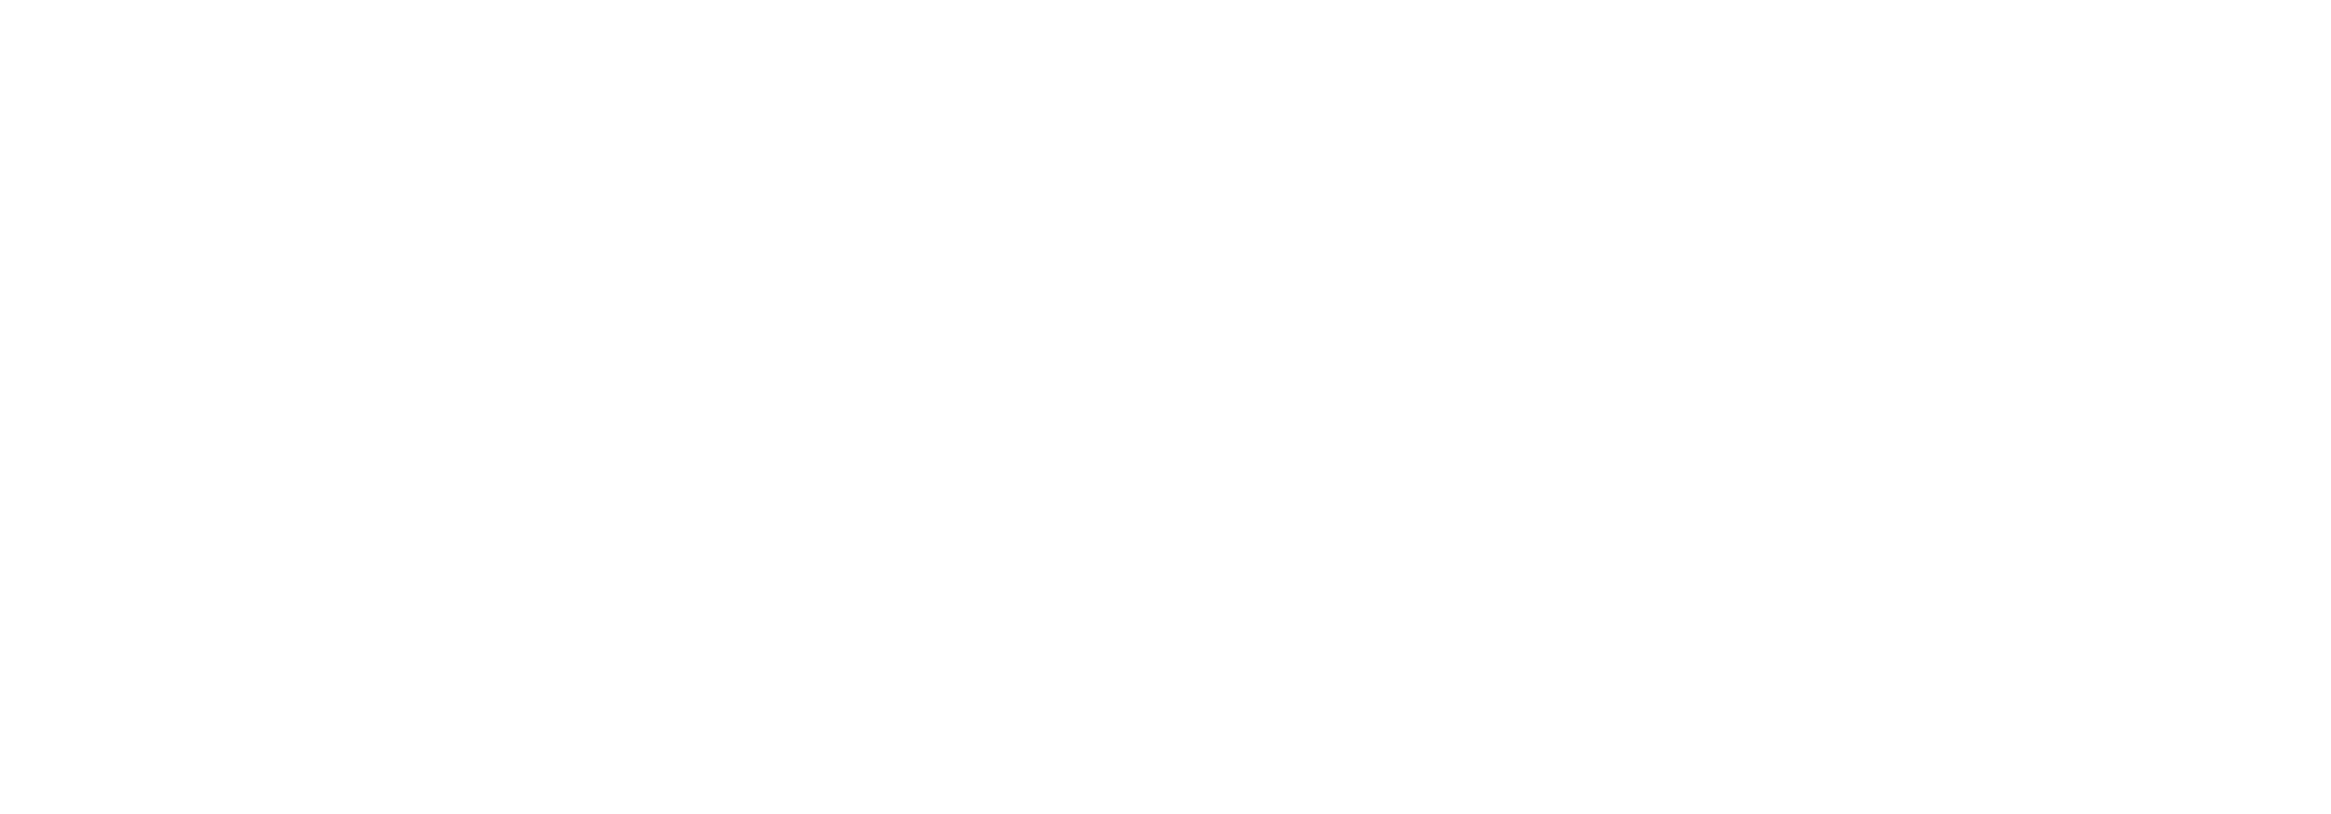 Gaus Scott Company